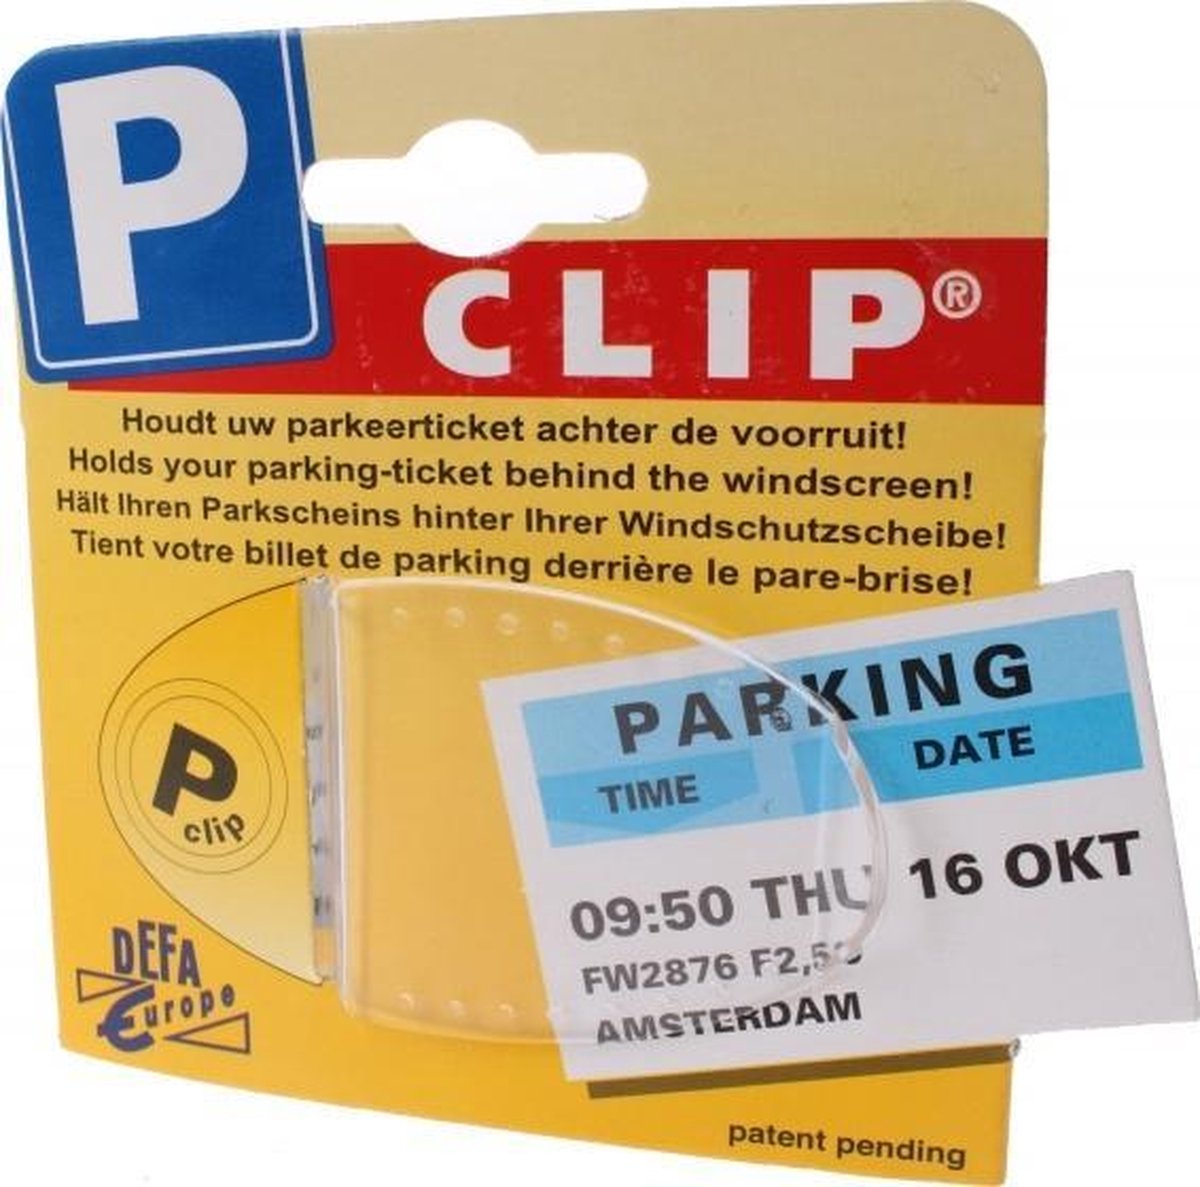 Porte-ticket Defa P-Clip Parking